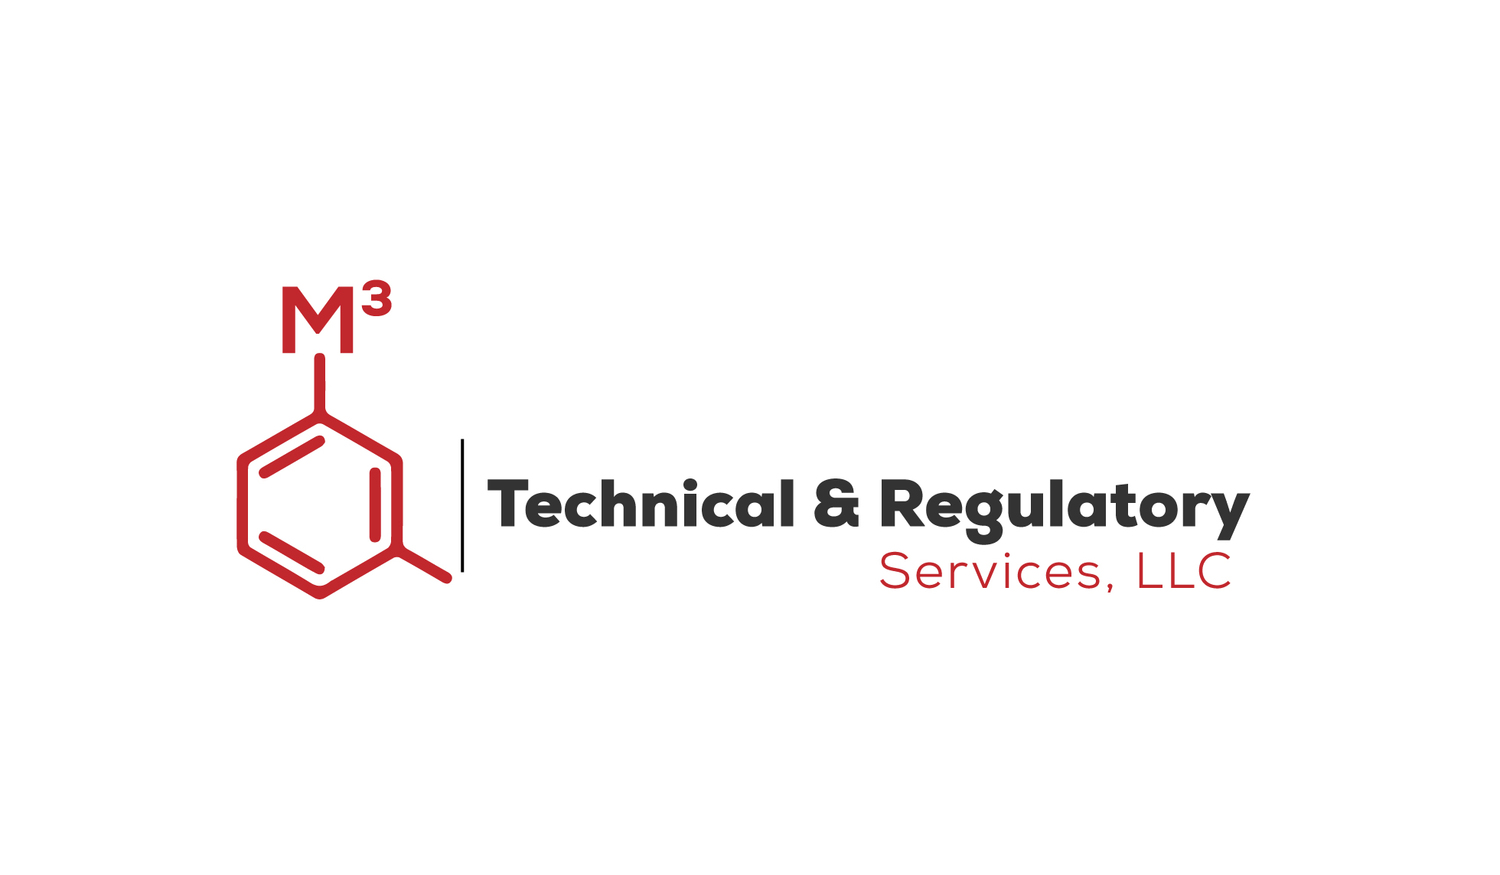 M³ Technical & Regulatory Services, LLC